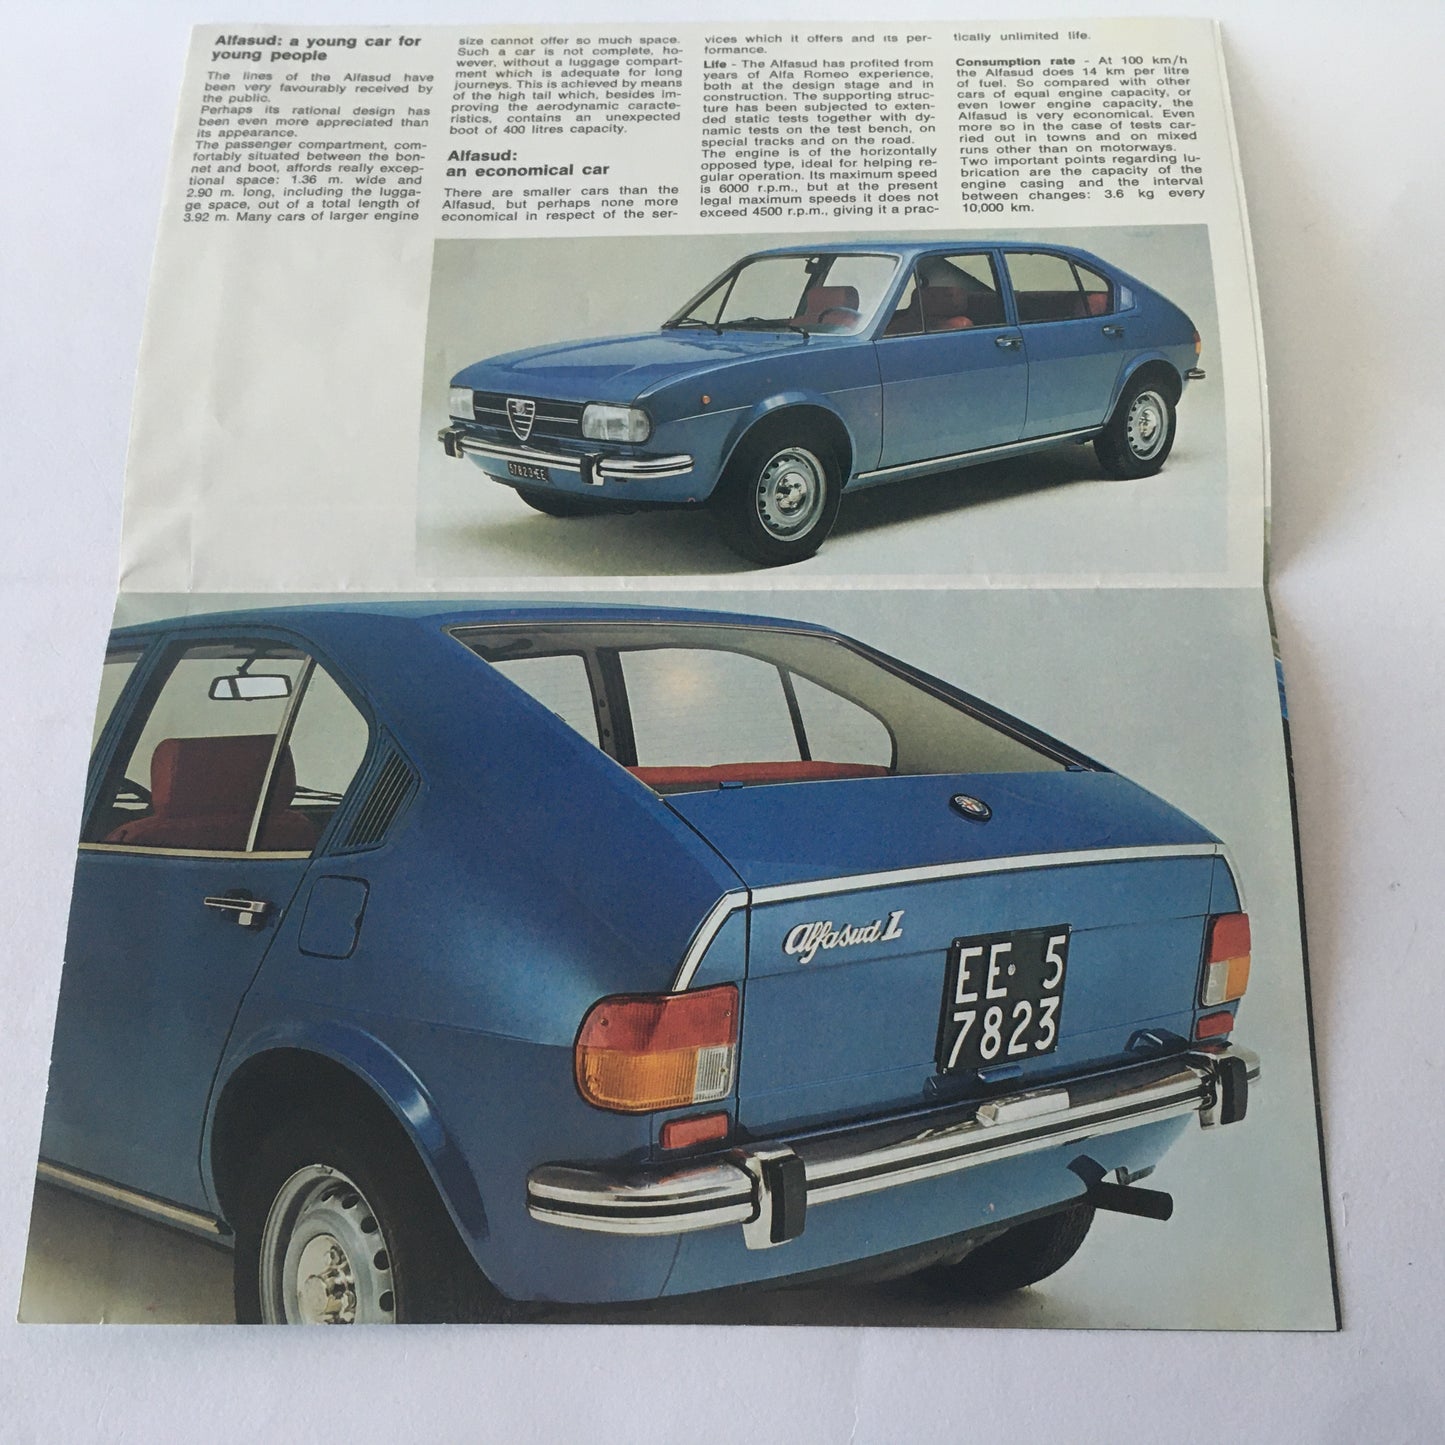 Alfa Romeo, Brochure Poster Alfasud, Lingua Inglese, Anni'70